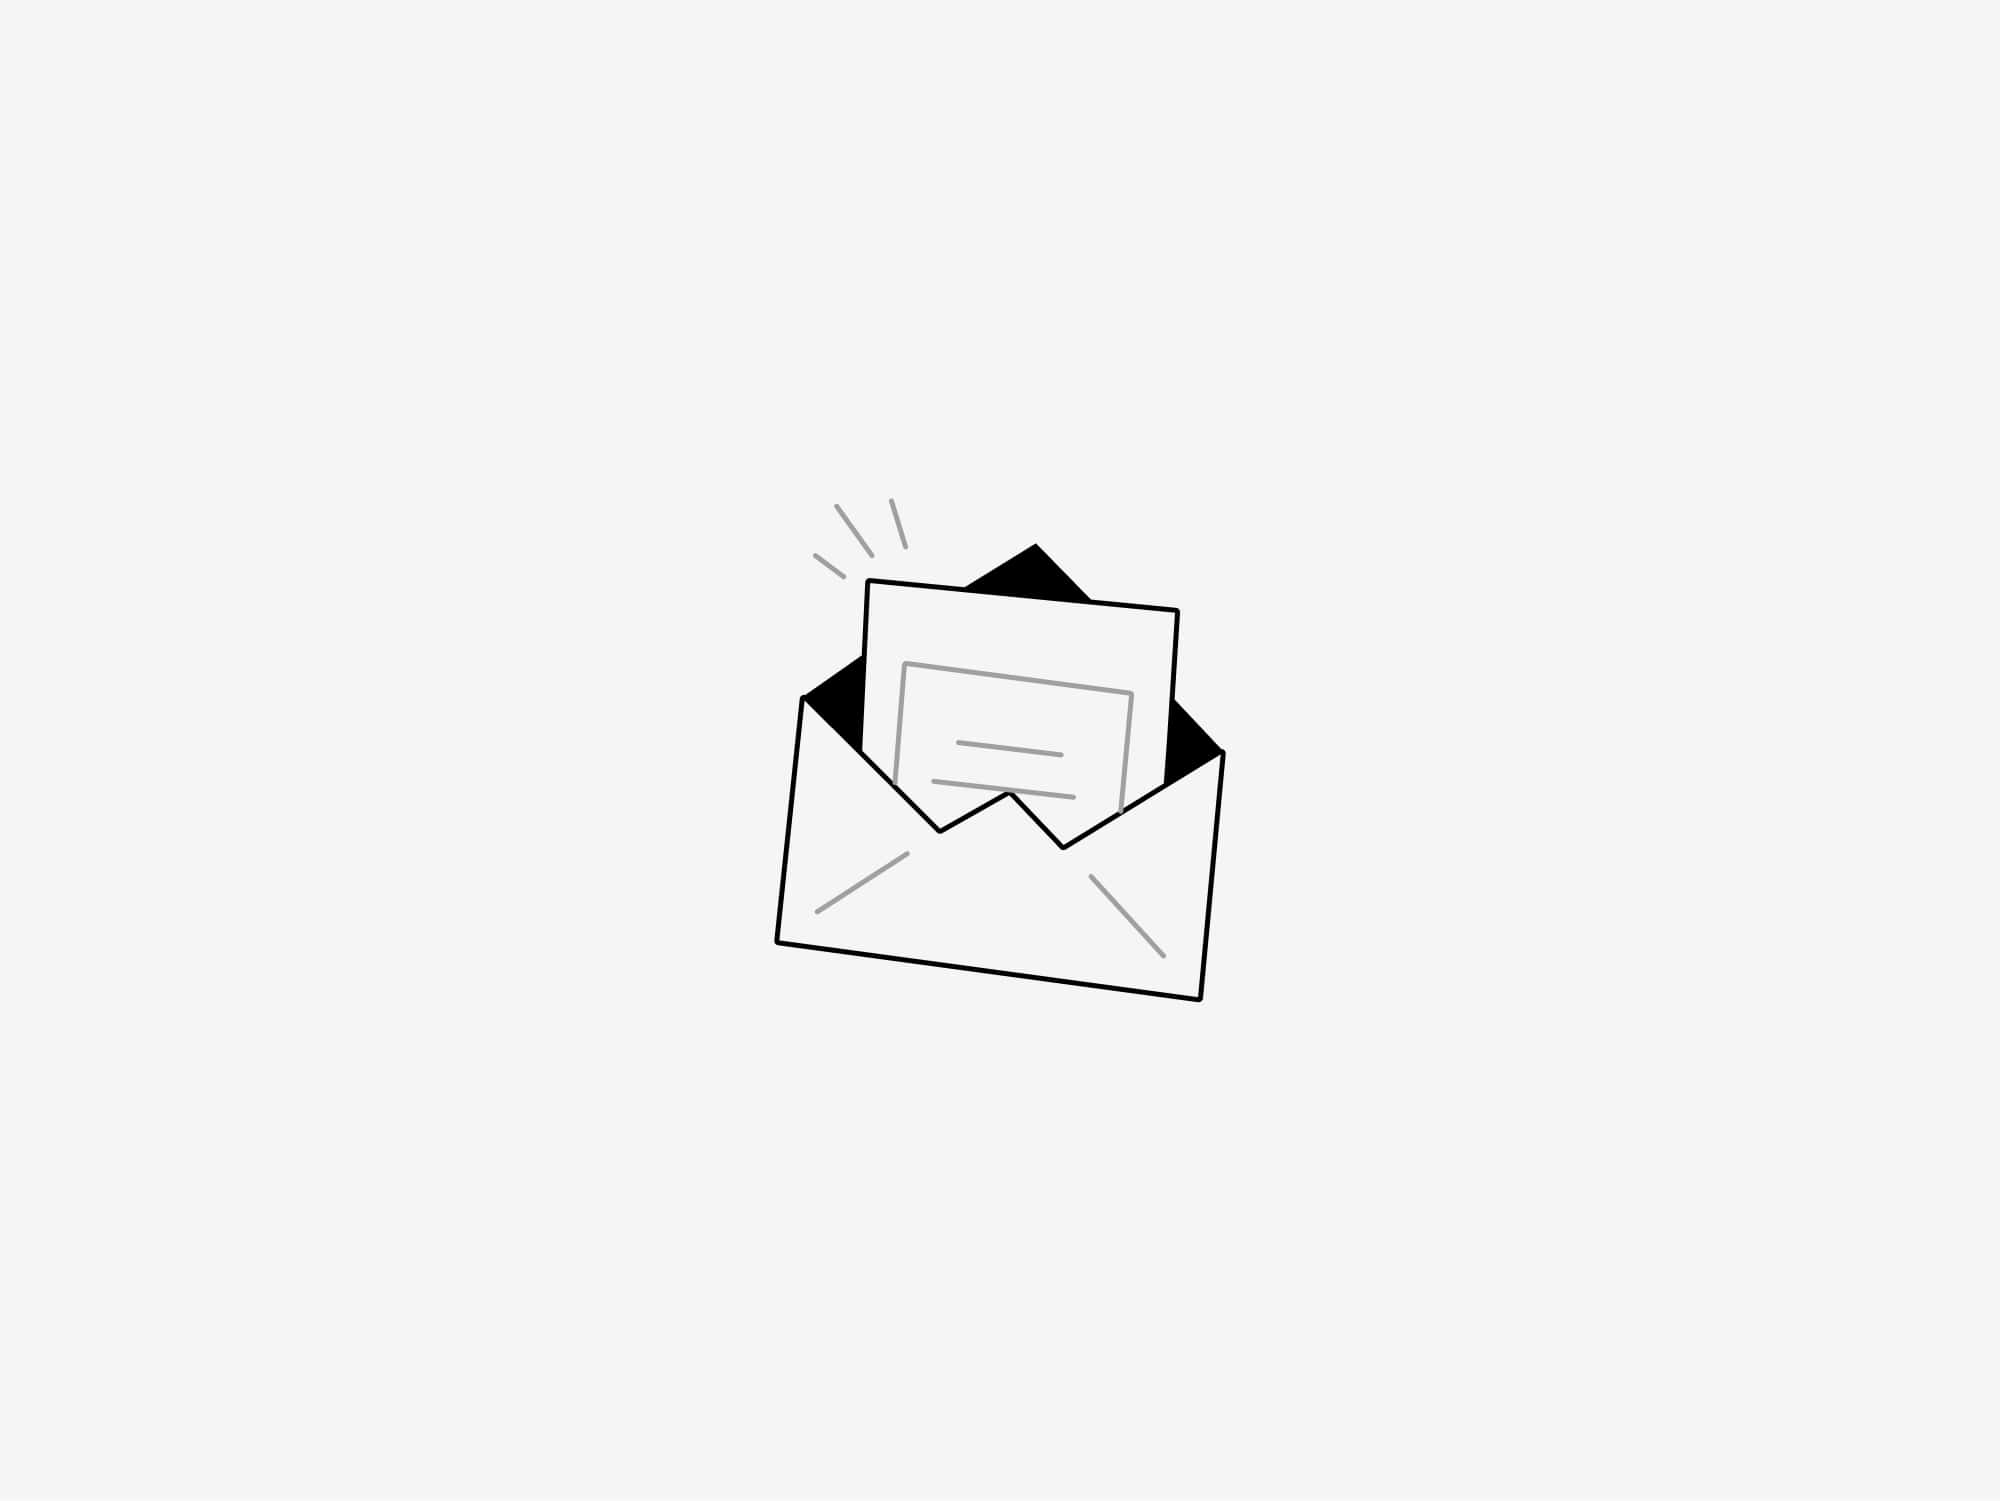 Open-envelope